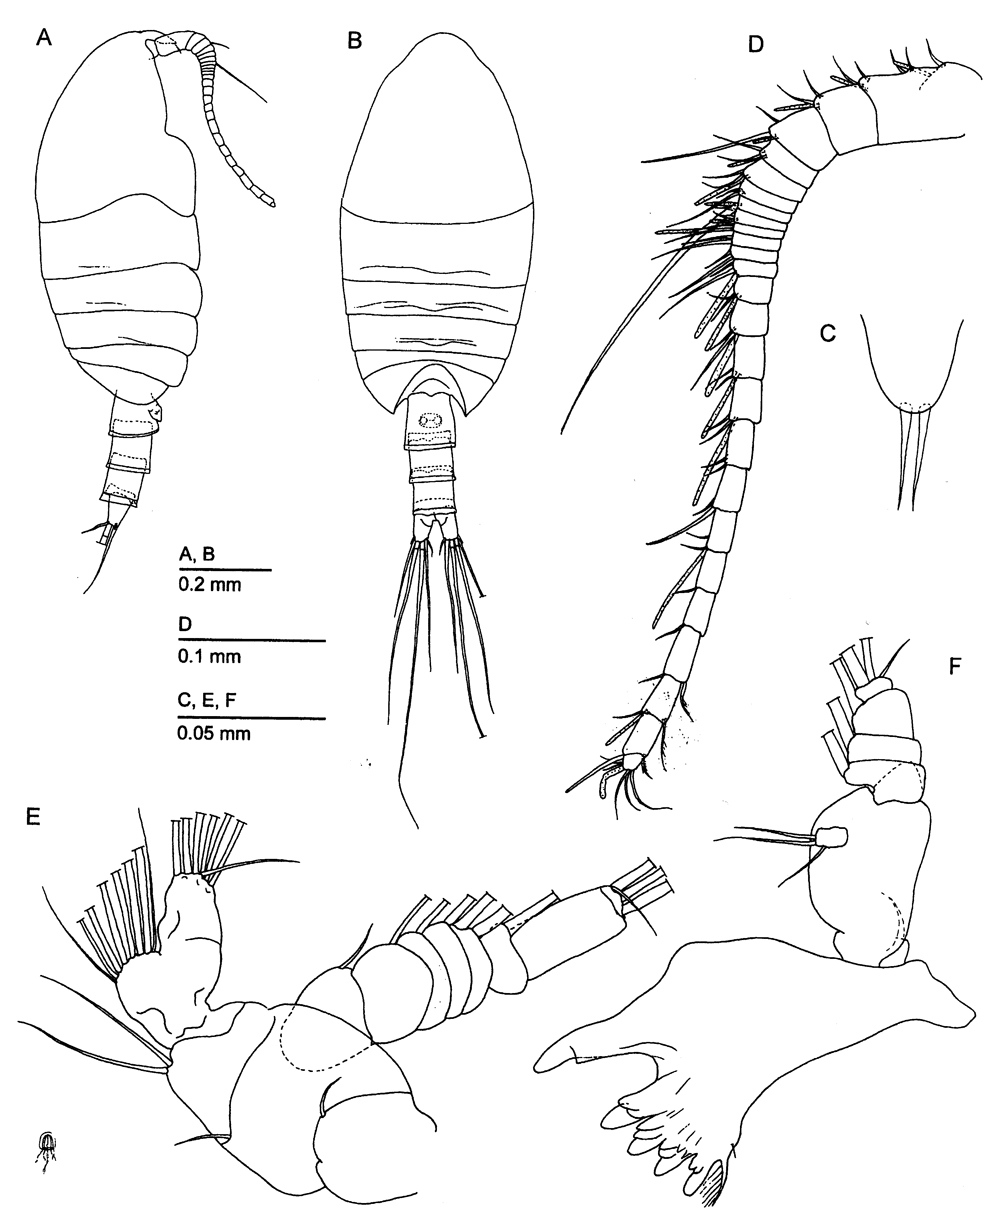 Species Cryptonectes brachyceratus - Plate 1 of morphological figures